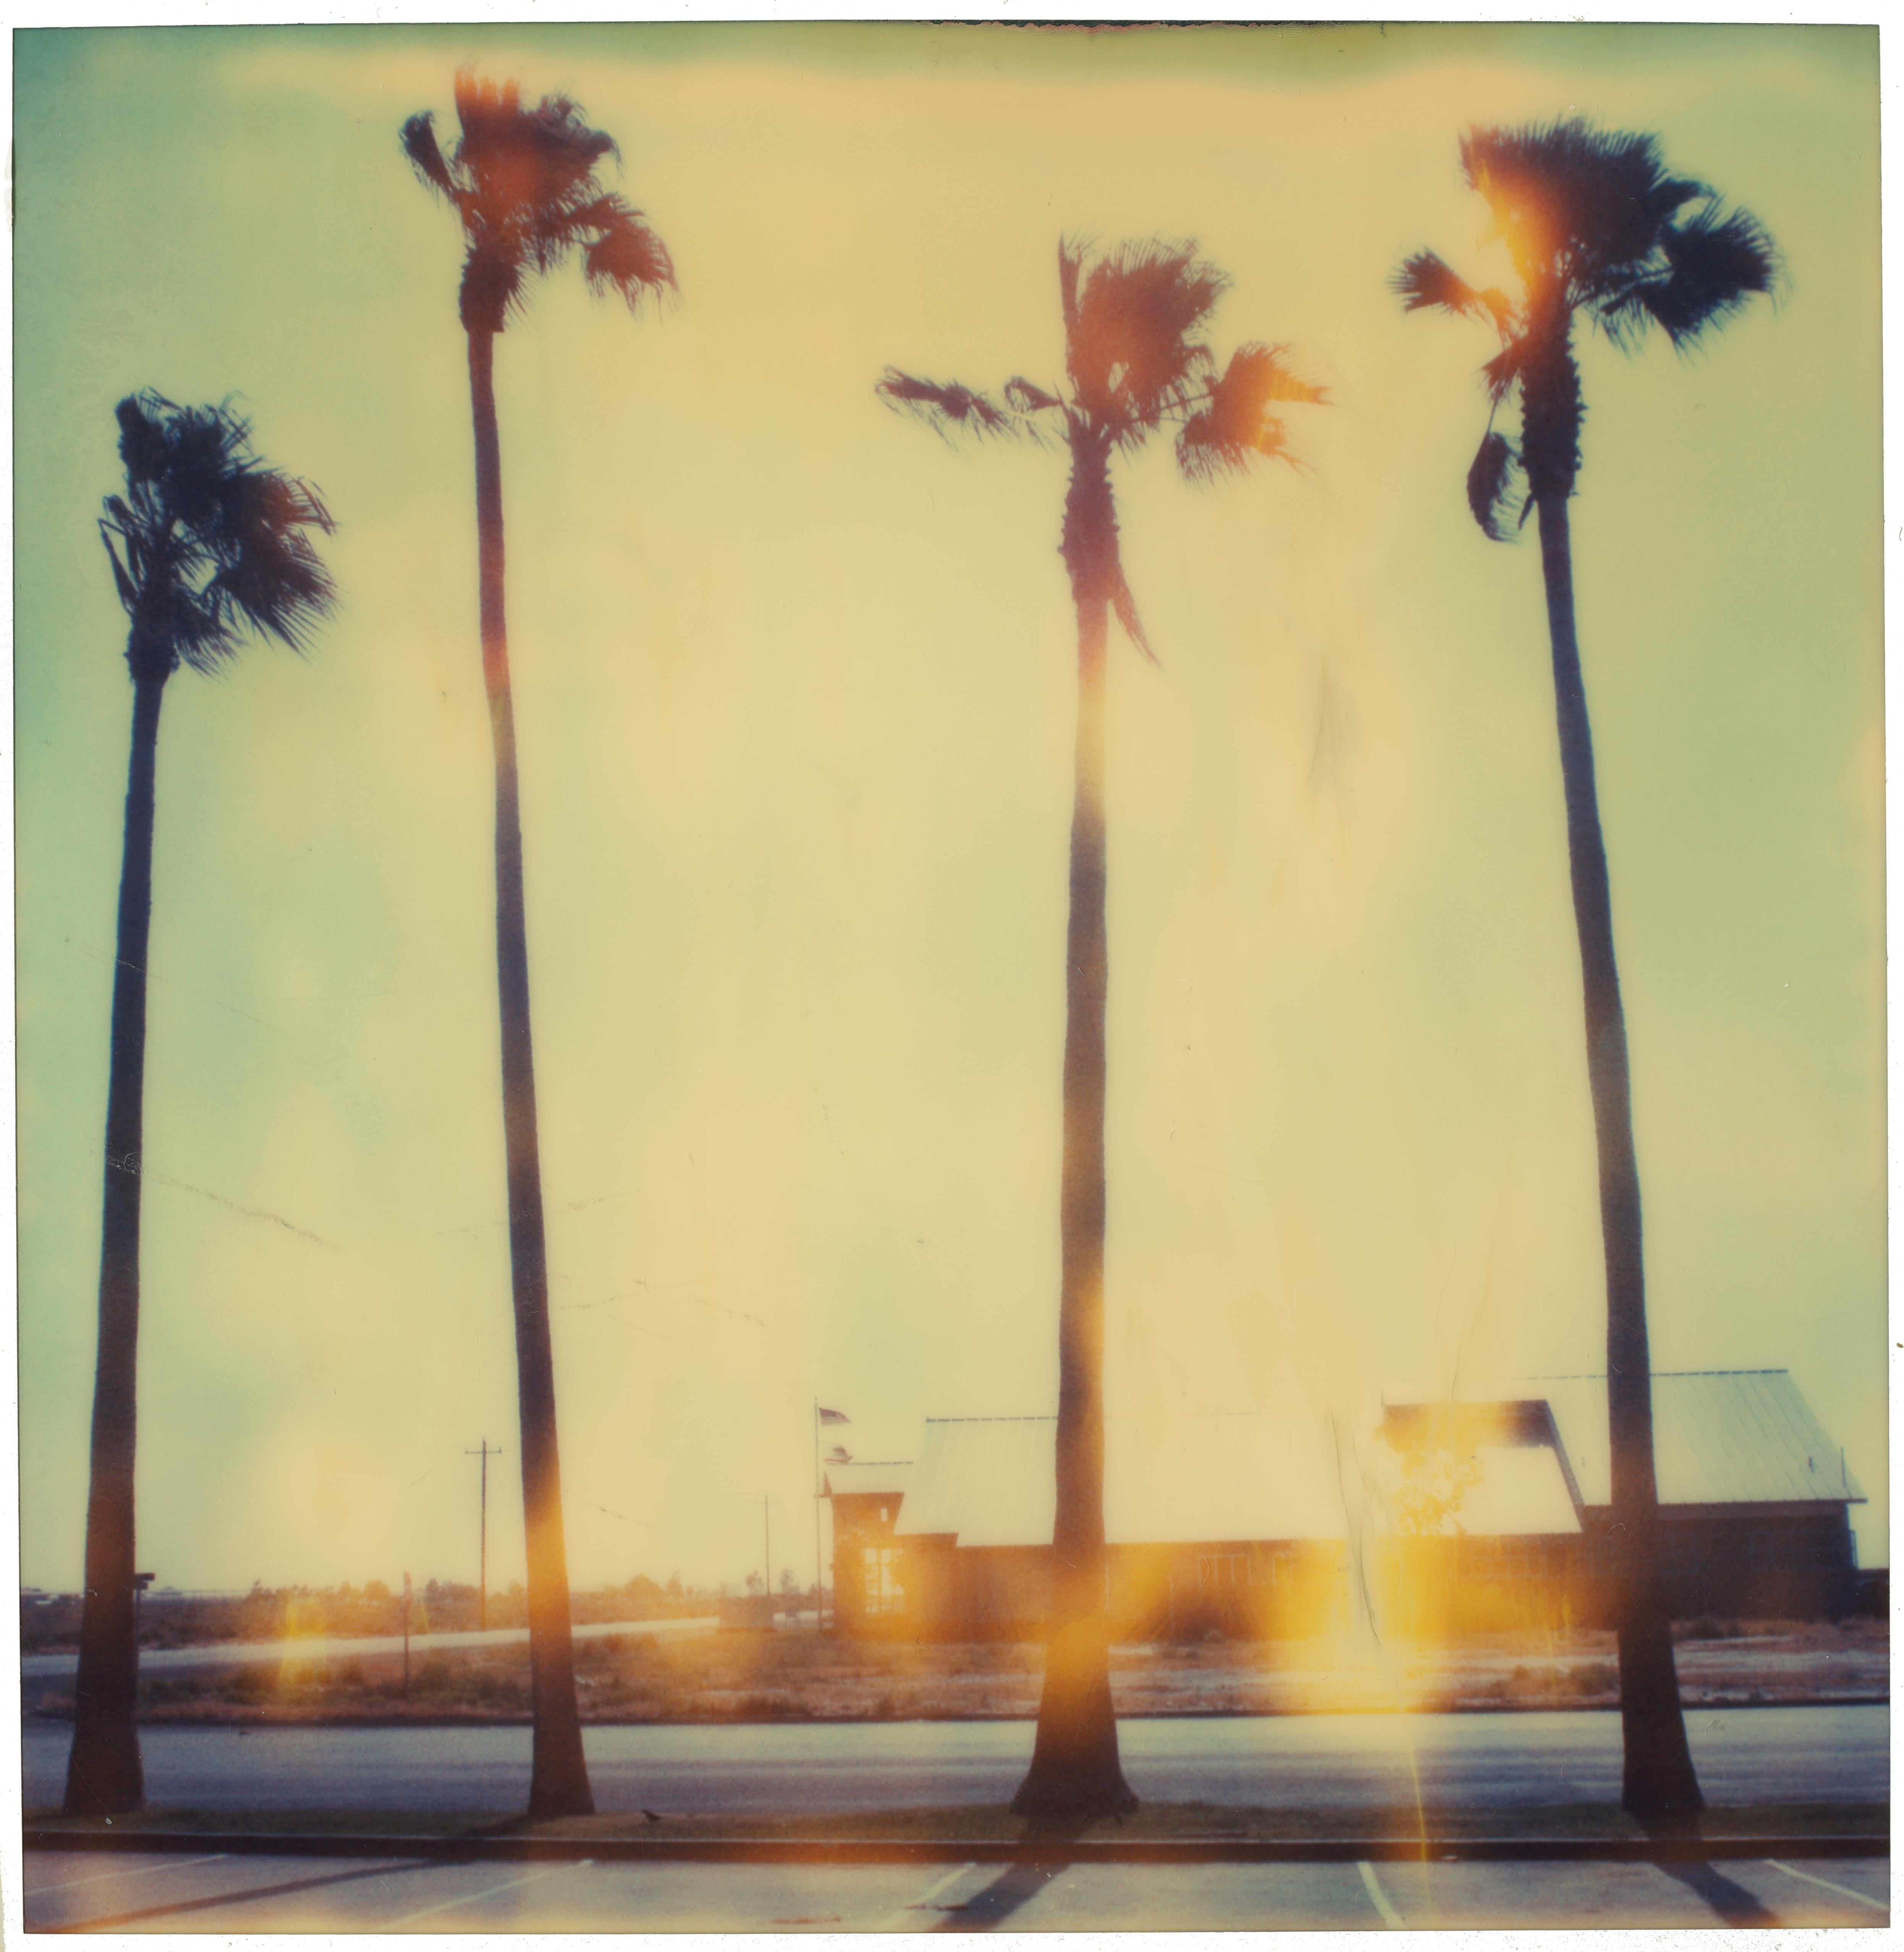 Stefanie Schneider Landscape Photograph - Palm Tree Restaurant (analog) 58x56cm - Edition 8/10, not mounted - Polaroid